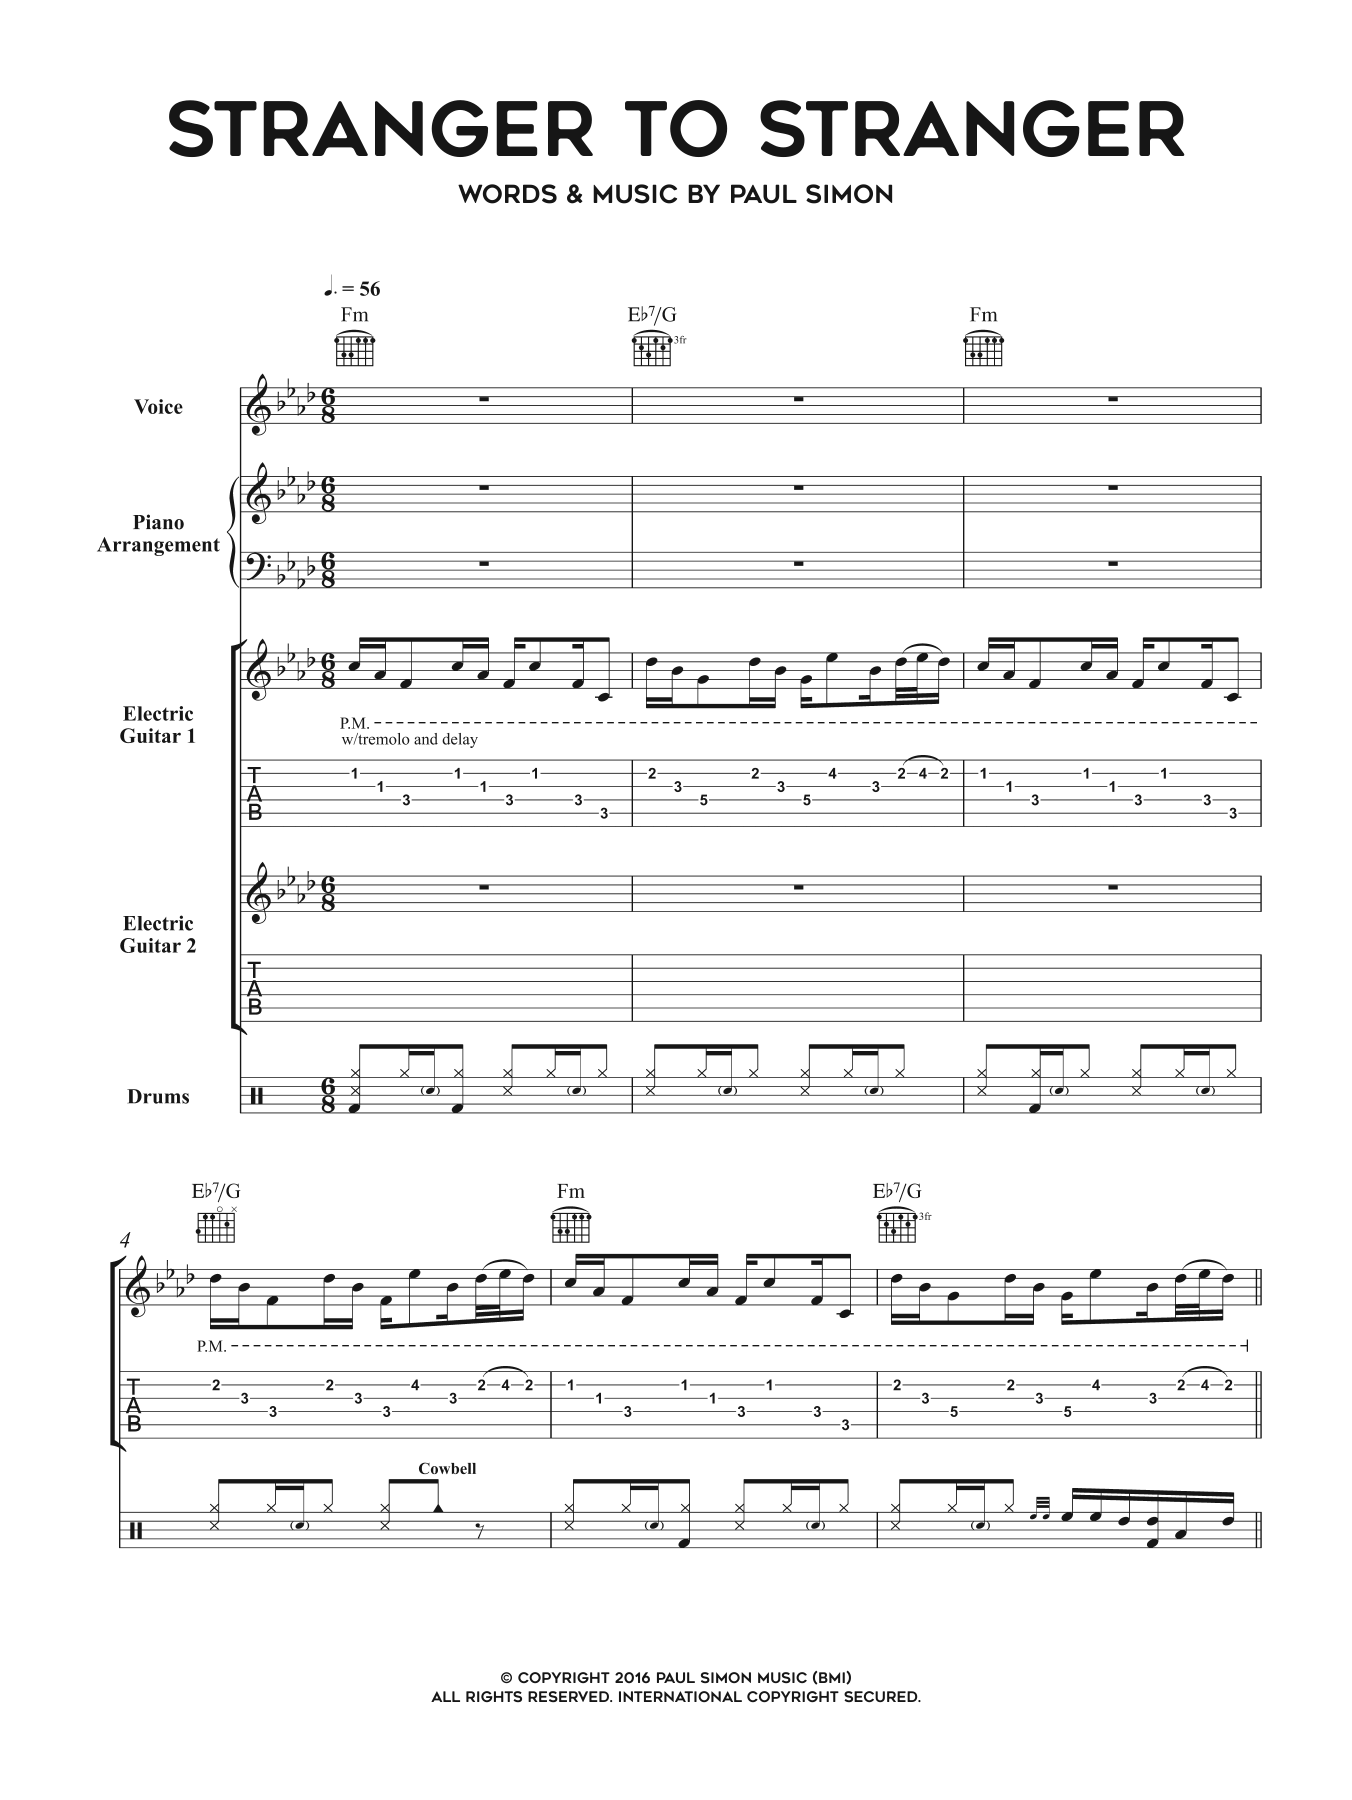 Paul Simon Stranger To Stranger Sheet Music Notes & Chords for Piano, Vocal & Guitar Tab - Download or Print PDF